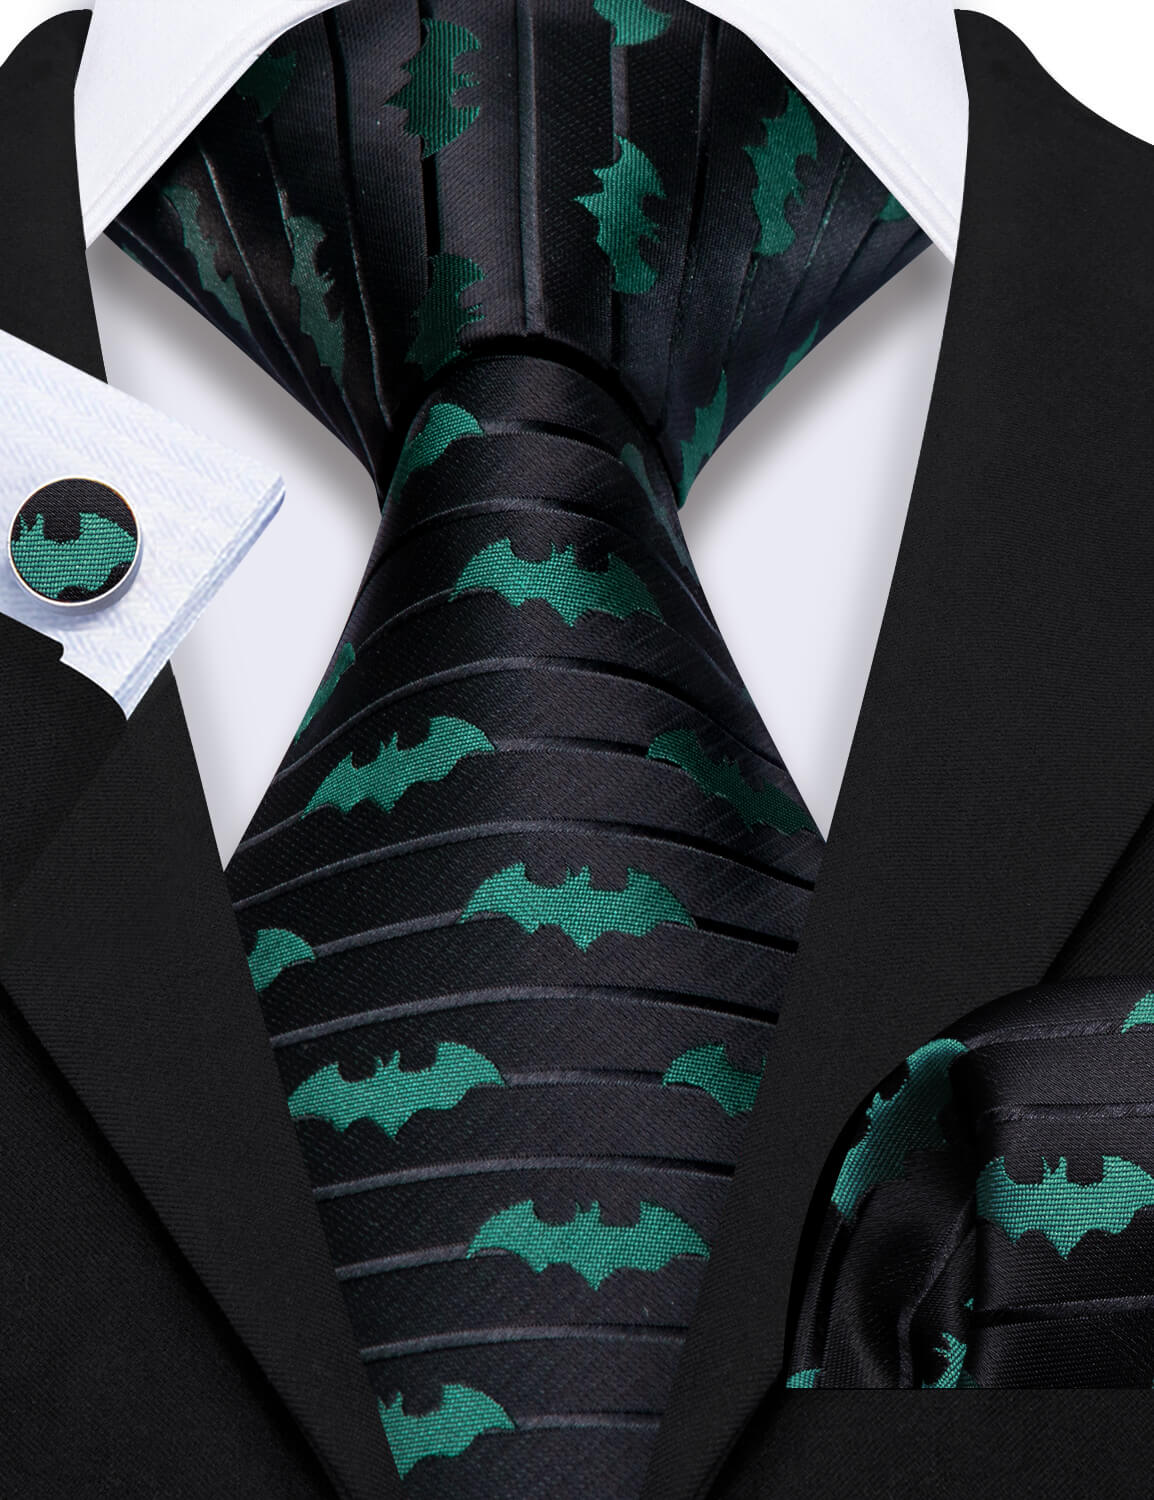 Barry.wang Black Tie Green Novelty Bat Men's Silk Tie Hanky Cufflinks Set